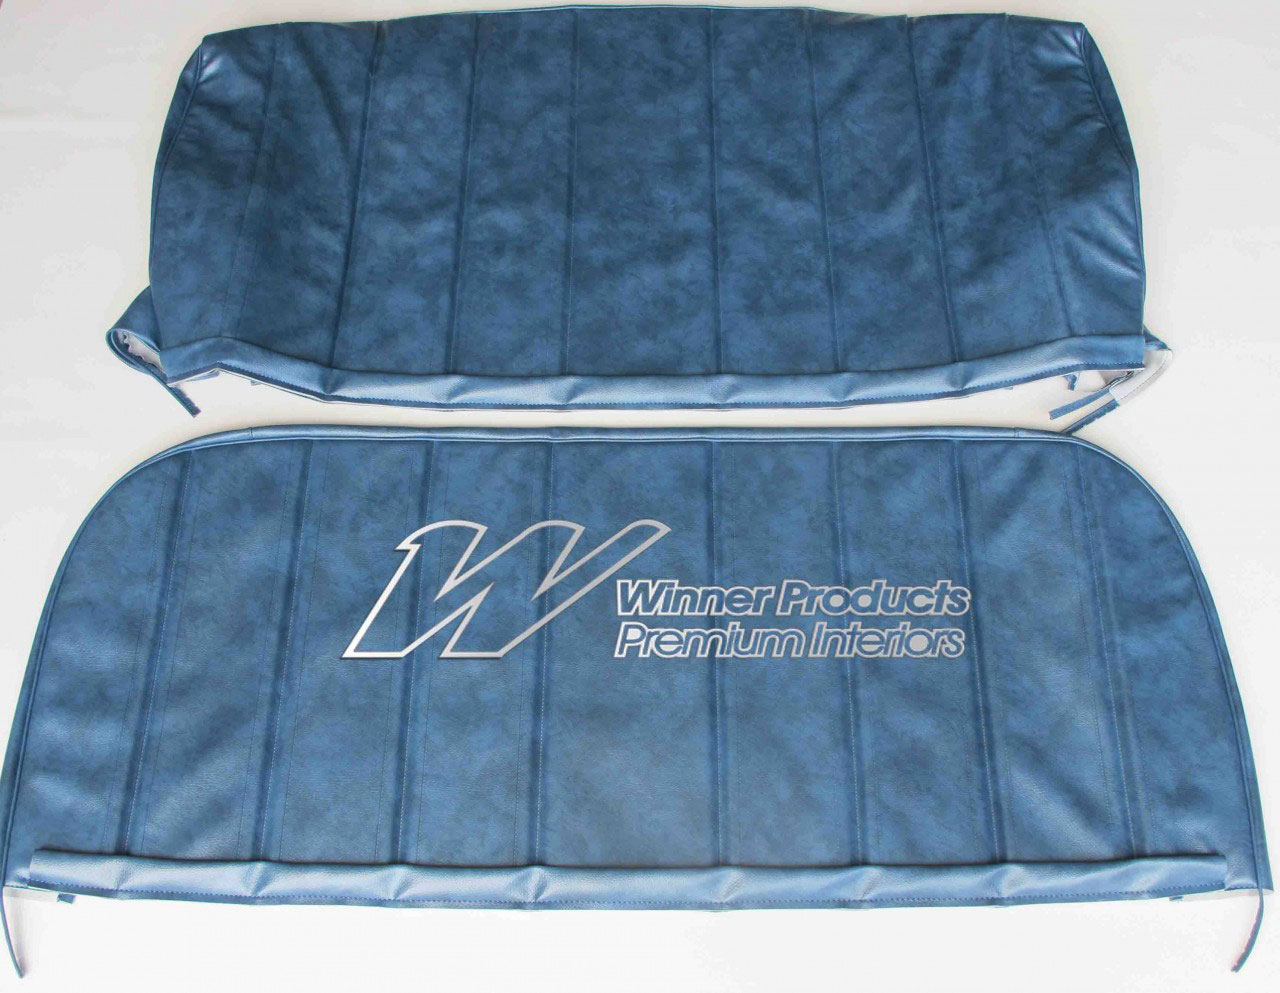 Holden Kingswood HG Kingswood Sedan 14E Twilight Blue Seat Covers (Image 1 of 2)